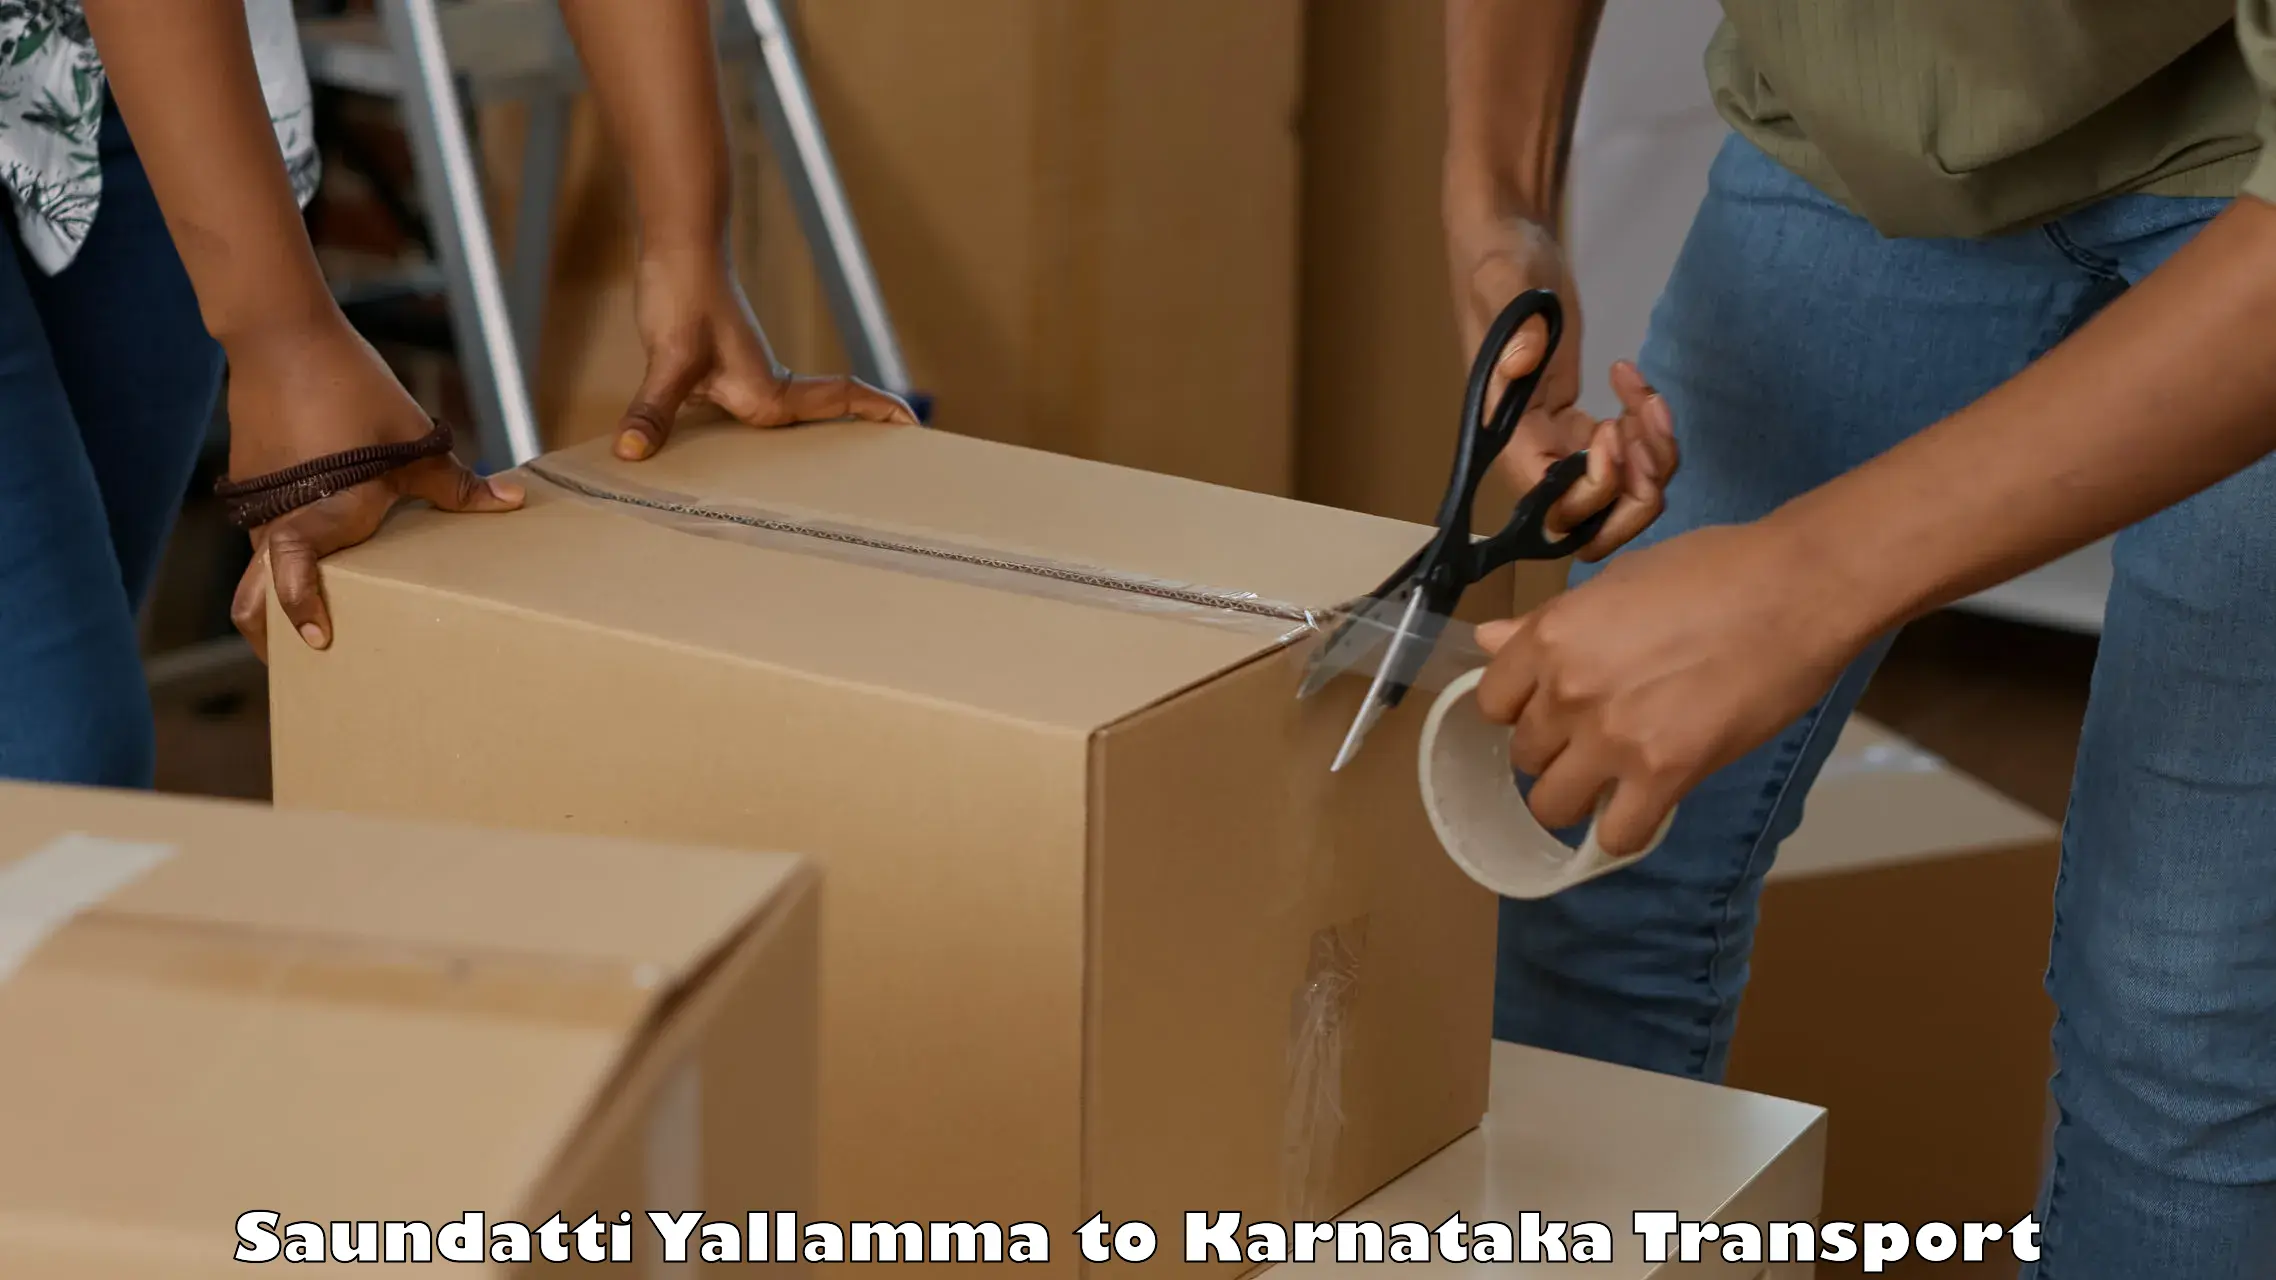 Transport in sharing Saundatti Yallamma to Karnataka